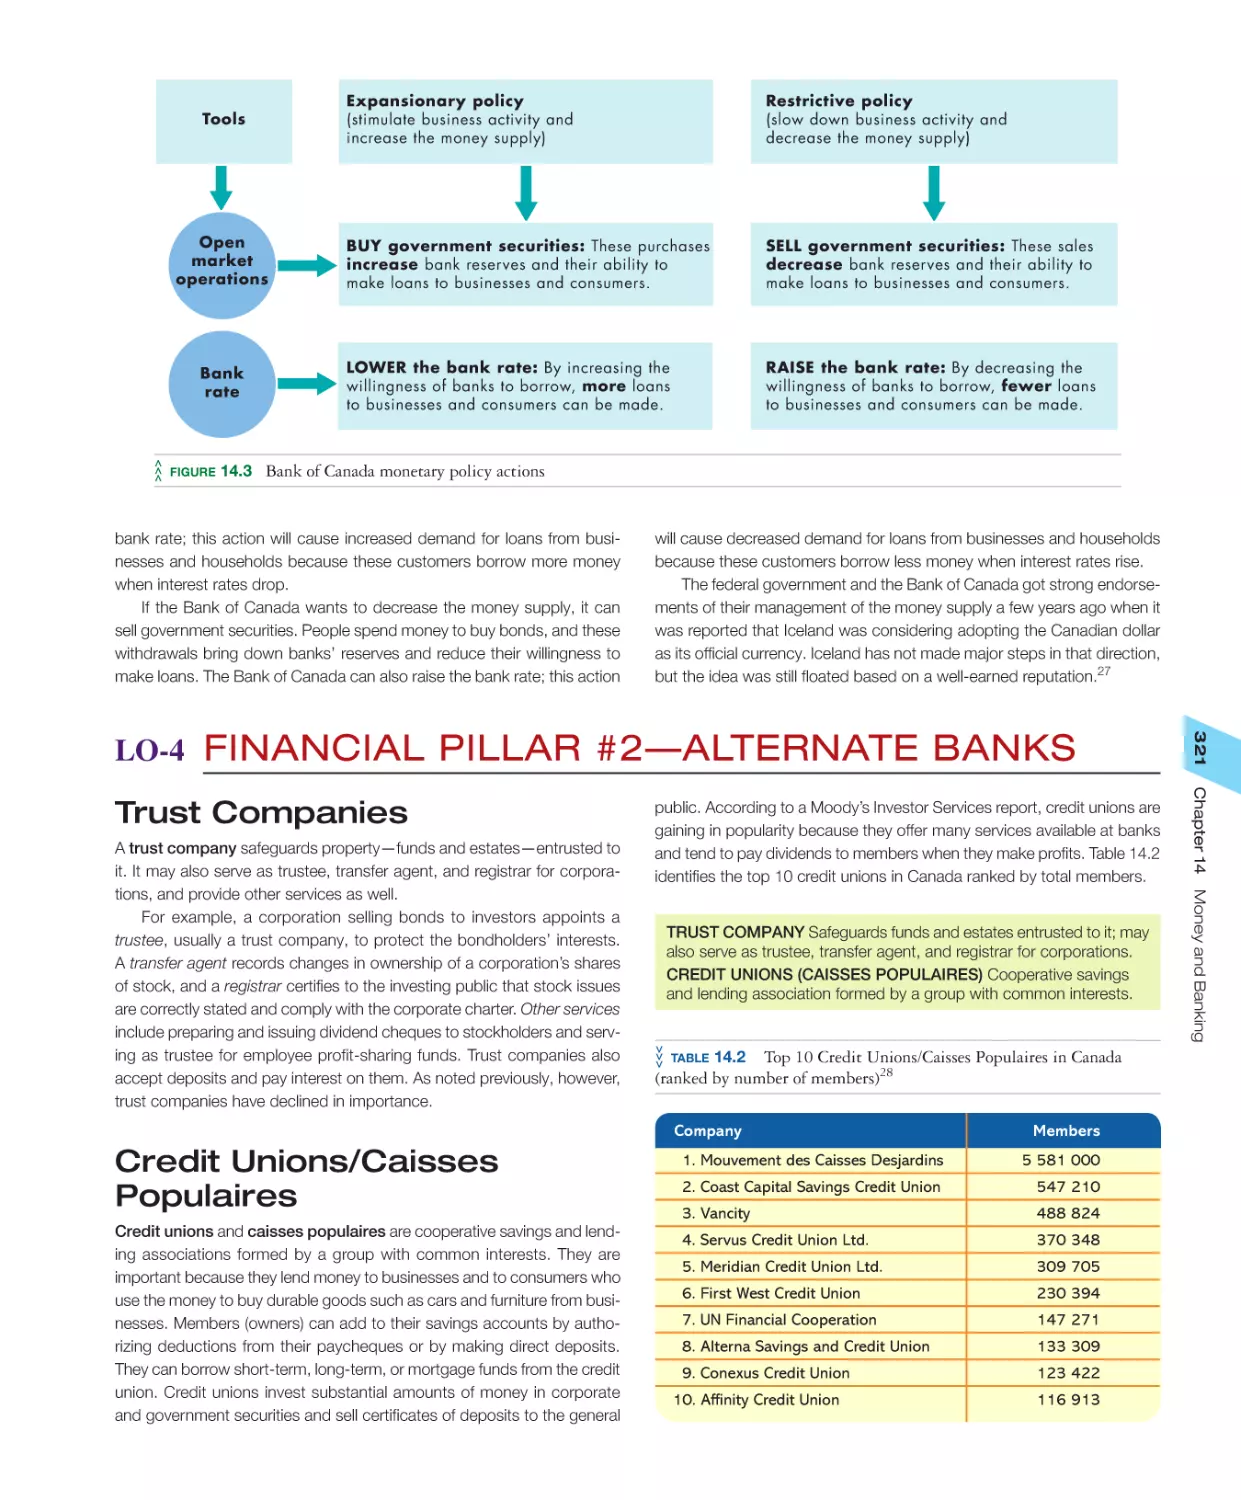 LO‐4 Financial Pillar #2—Alternate Banks
Credit Unions/Caisses Populaires